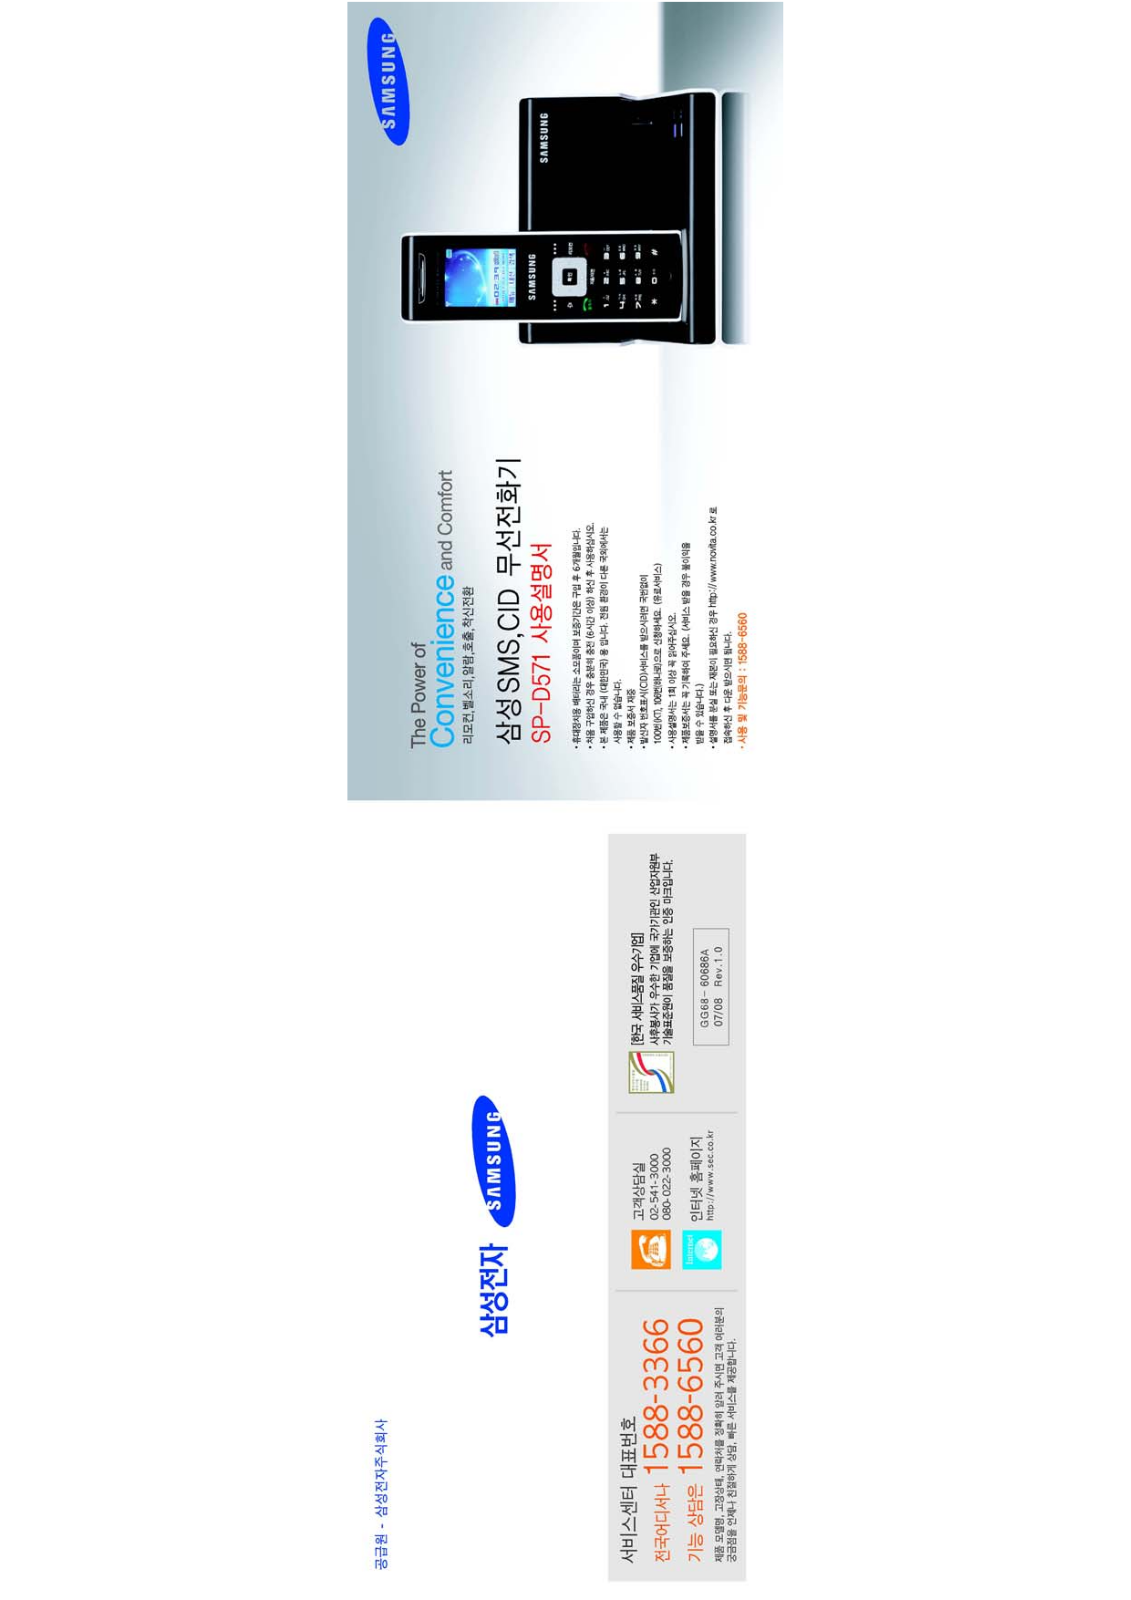 Samsung SP-D571BK, SP-D571HWH, SP-D571WH User Manual